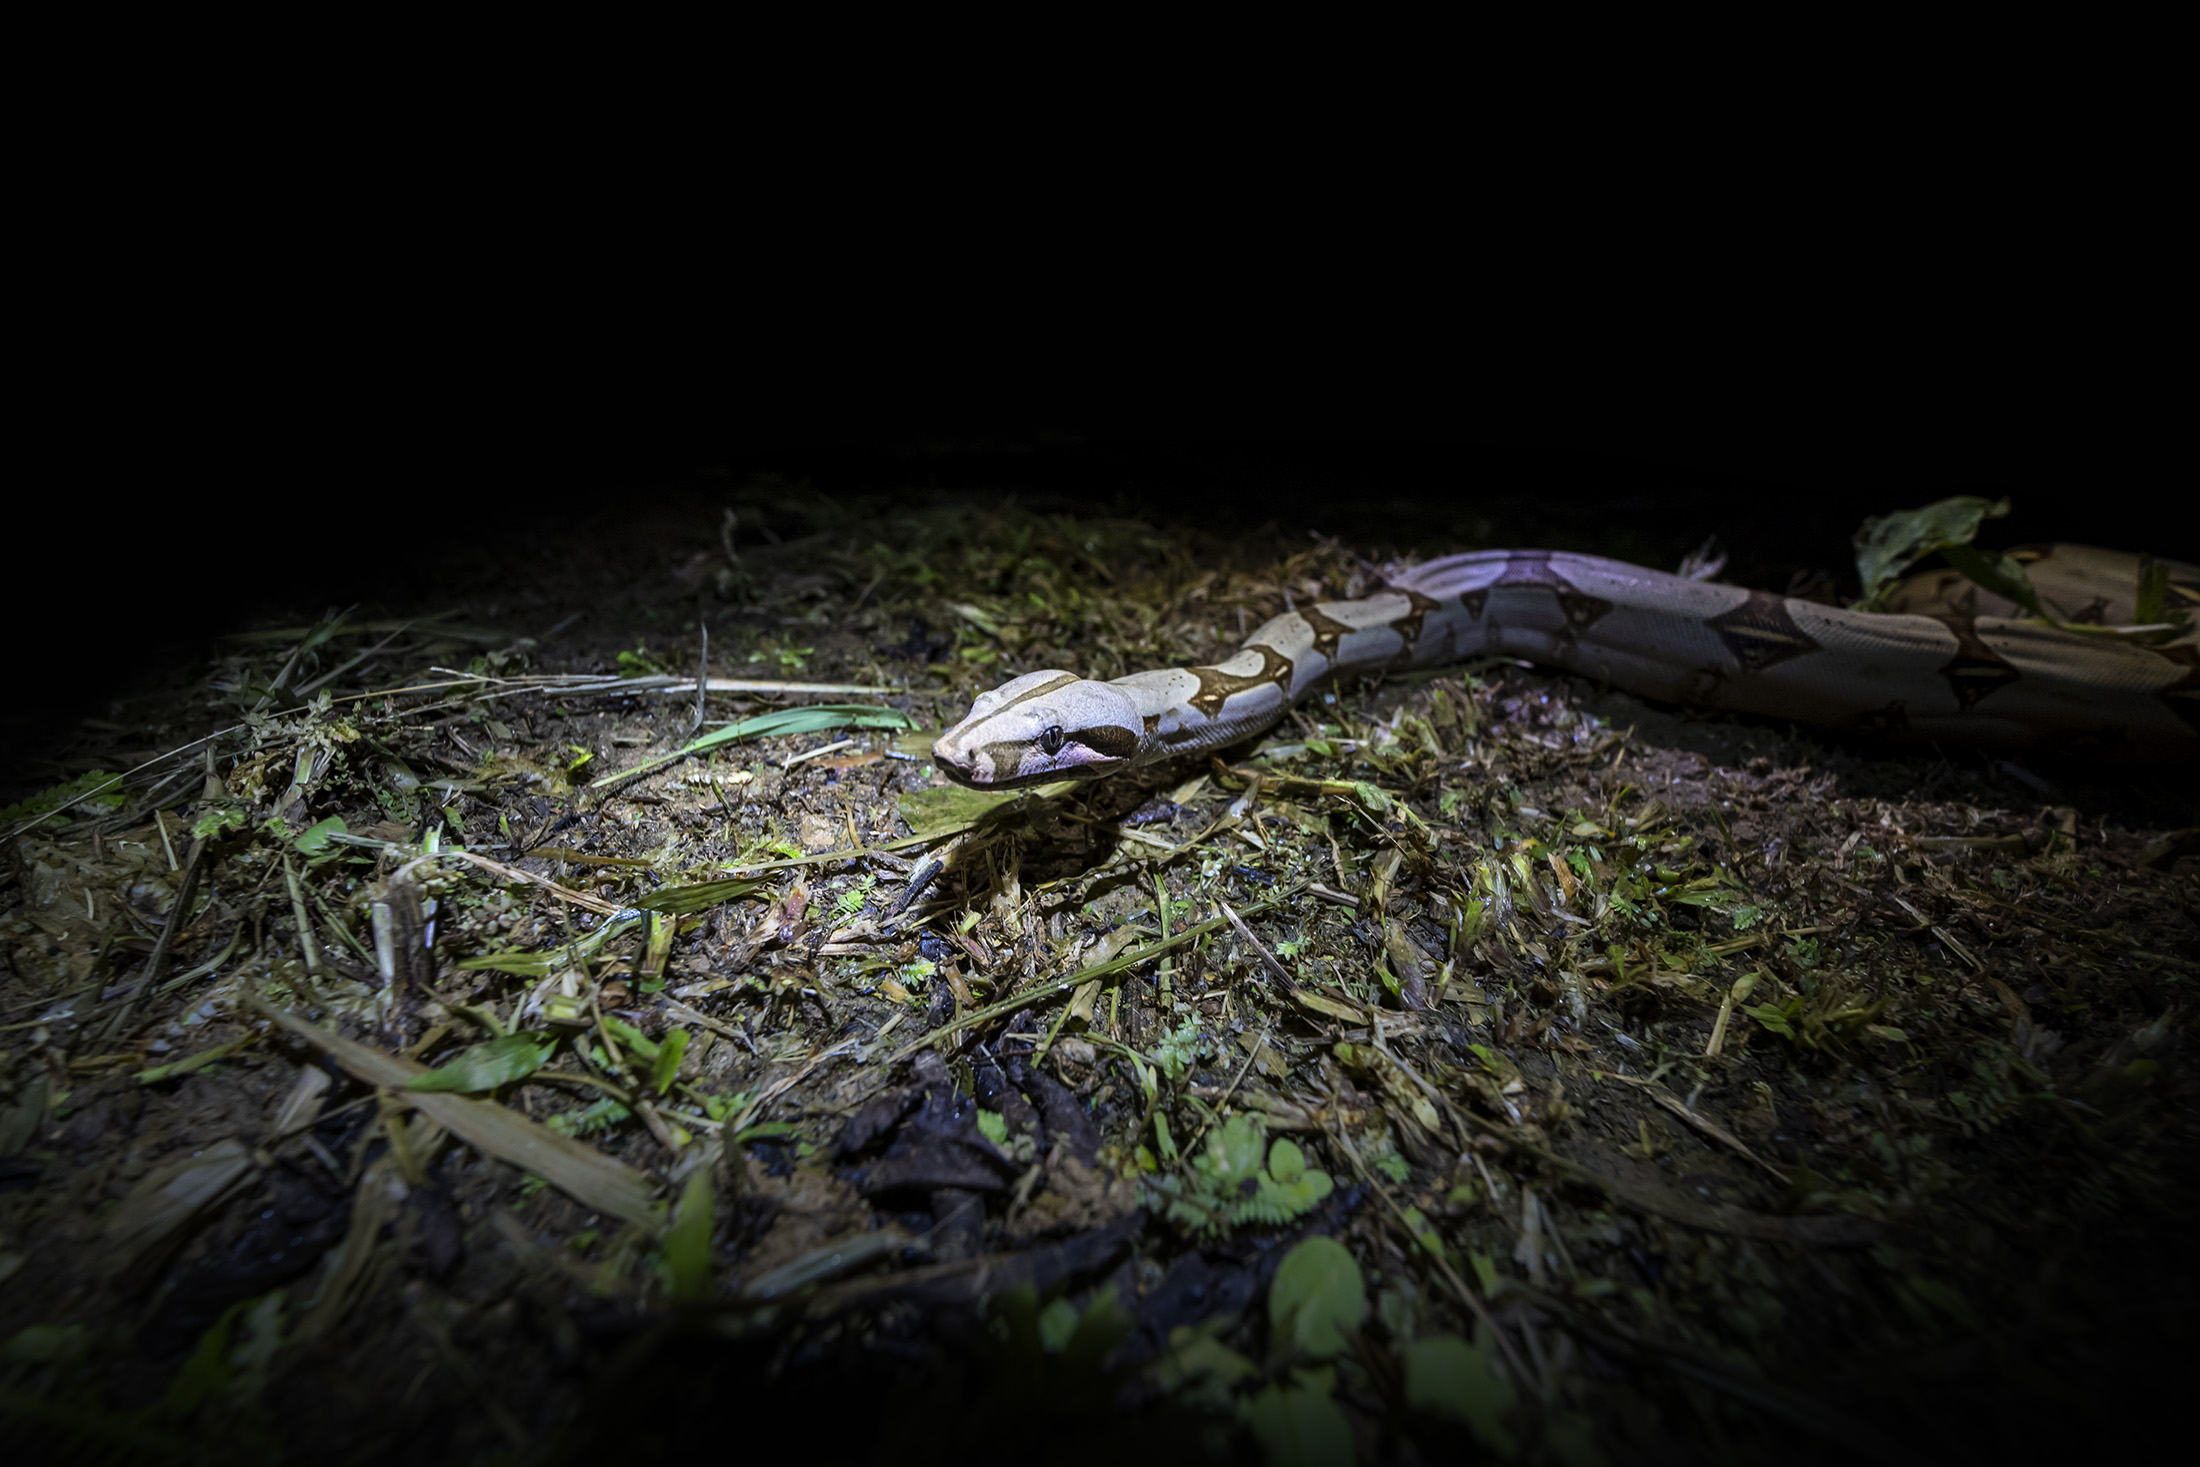 A boa slithering across leaf litter, spotlighted against a dark vignette